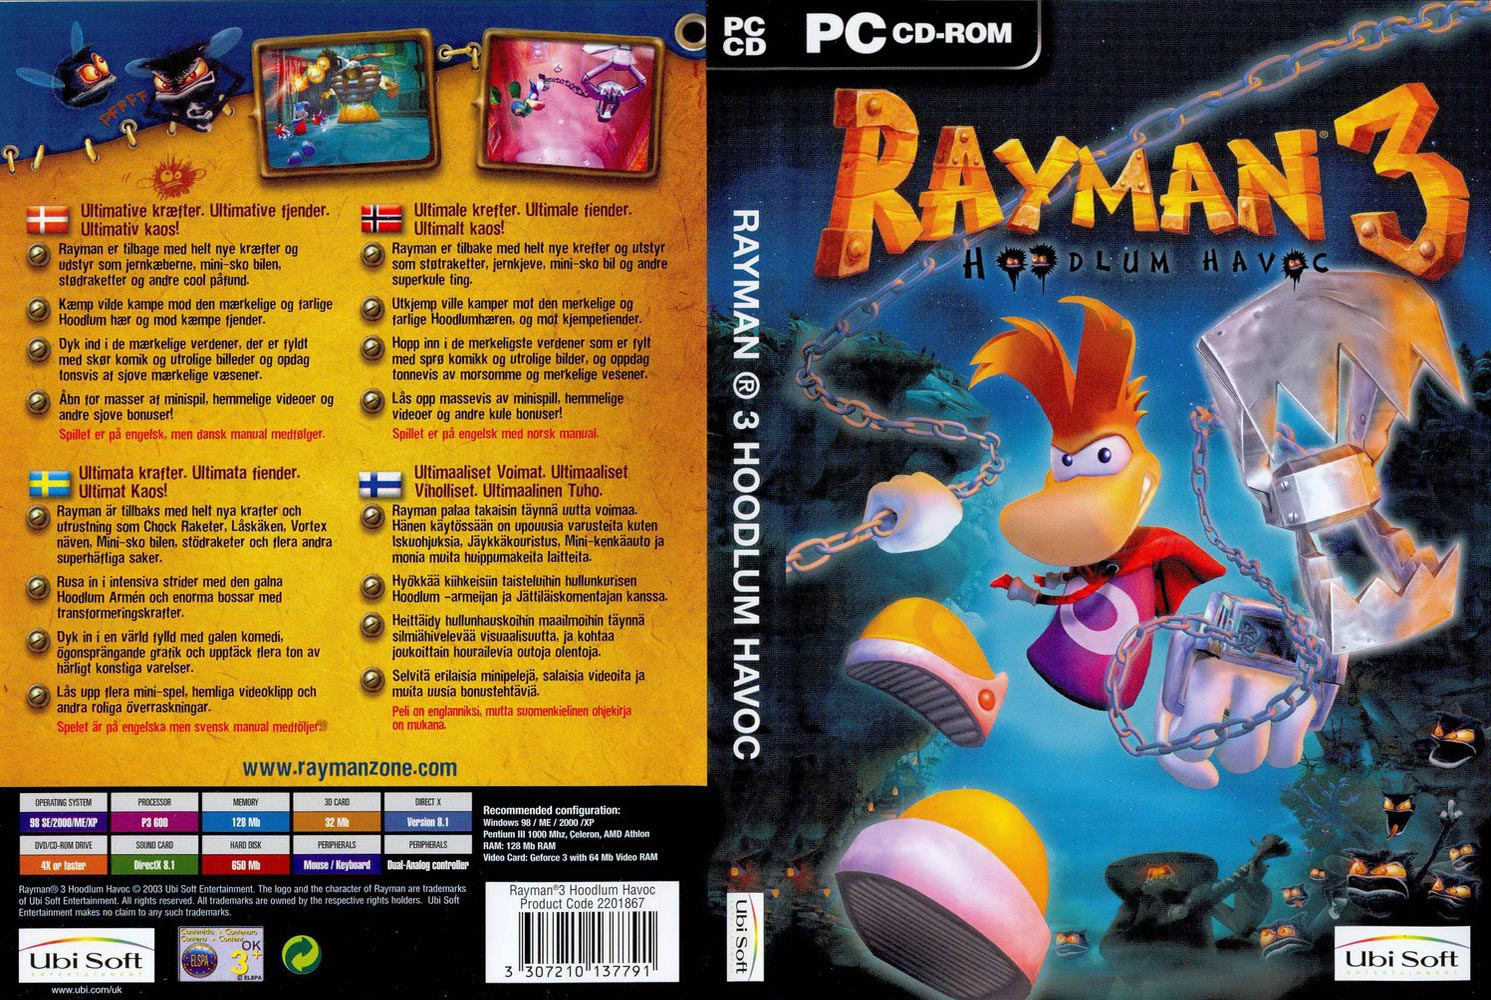 Rayman 3: Hoodlum Havoc - DVD obal